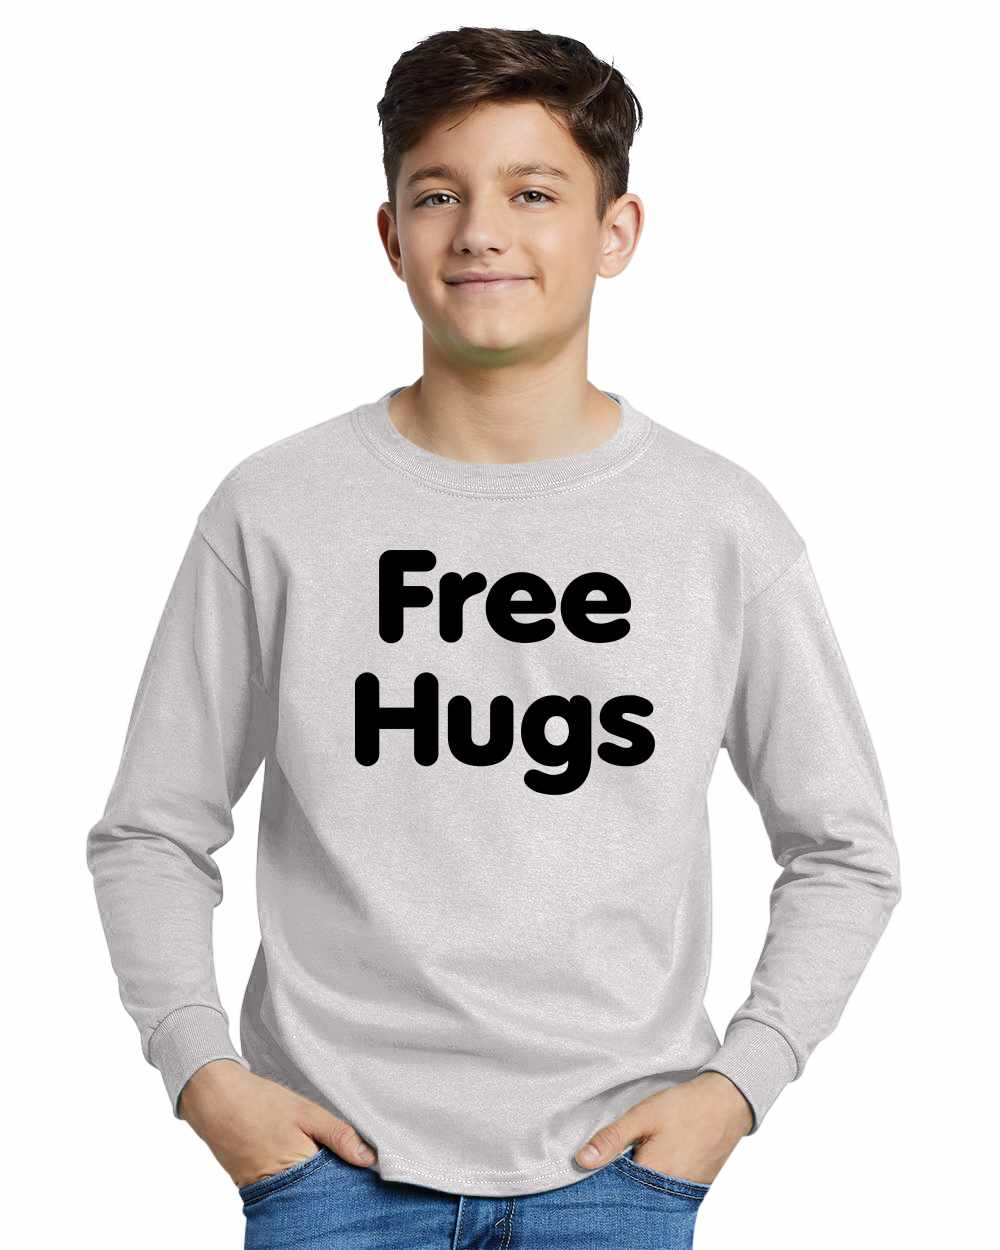 FREE HUGS on Youth Long Sleeve Shirt